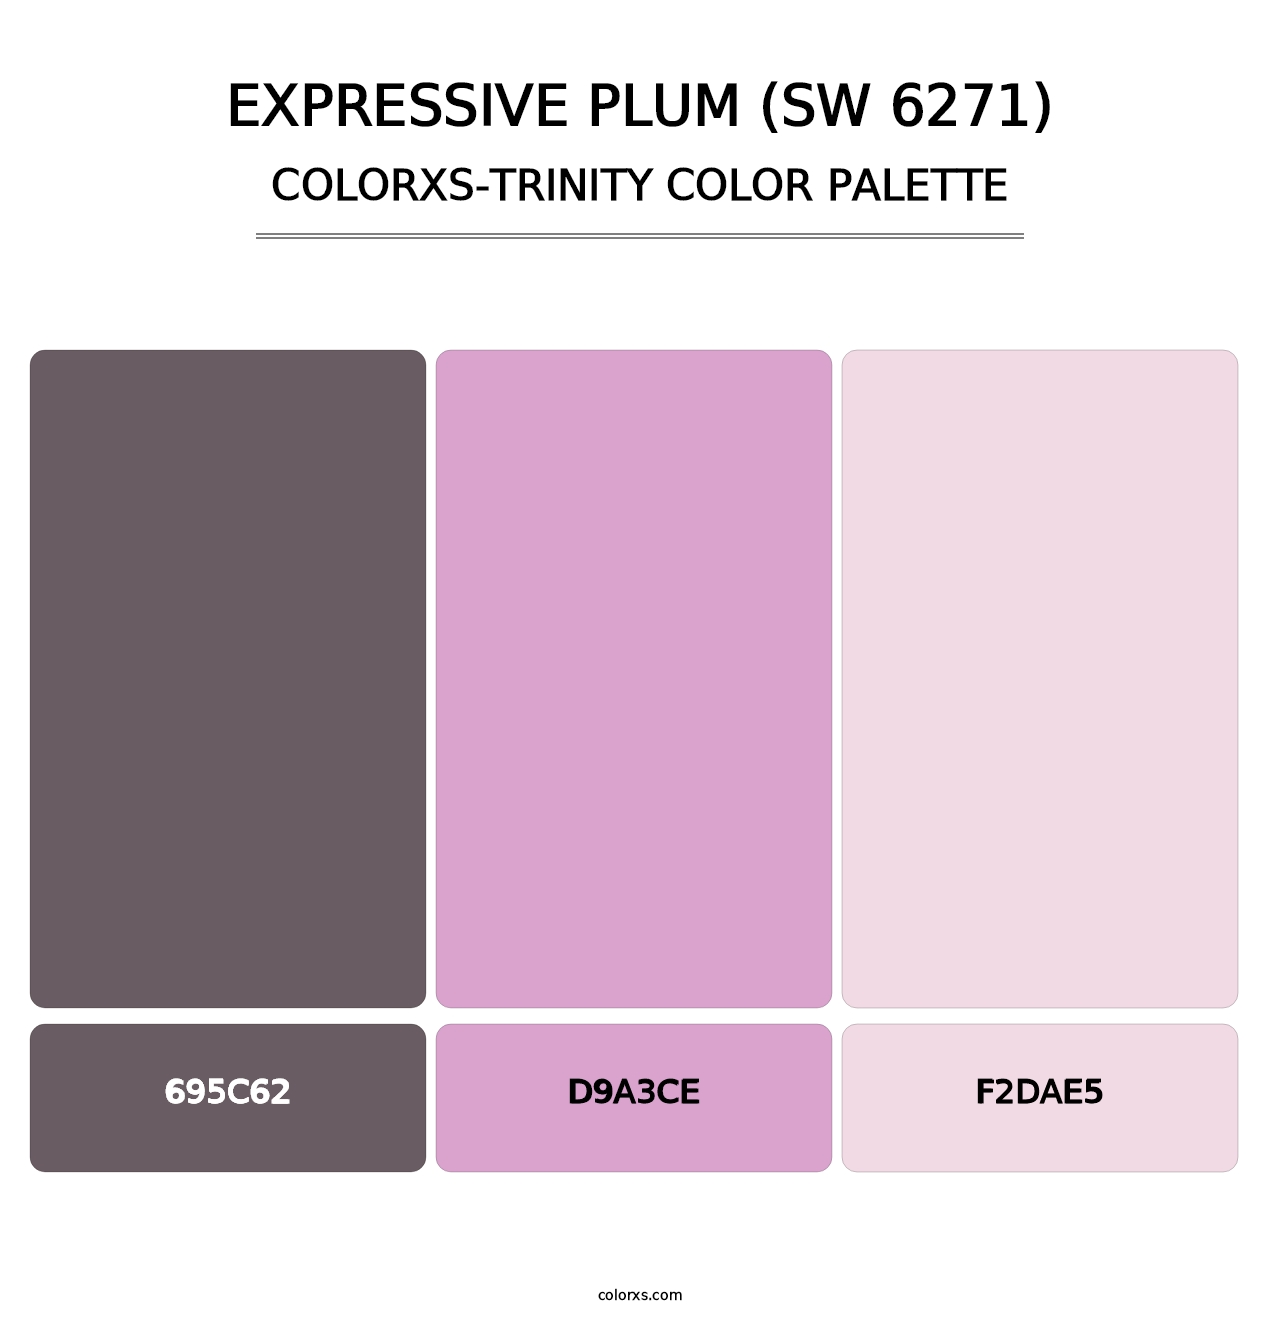 Expressive Plum (SW 6271) - Colorxs Trinity Palette